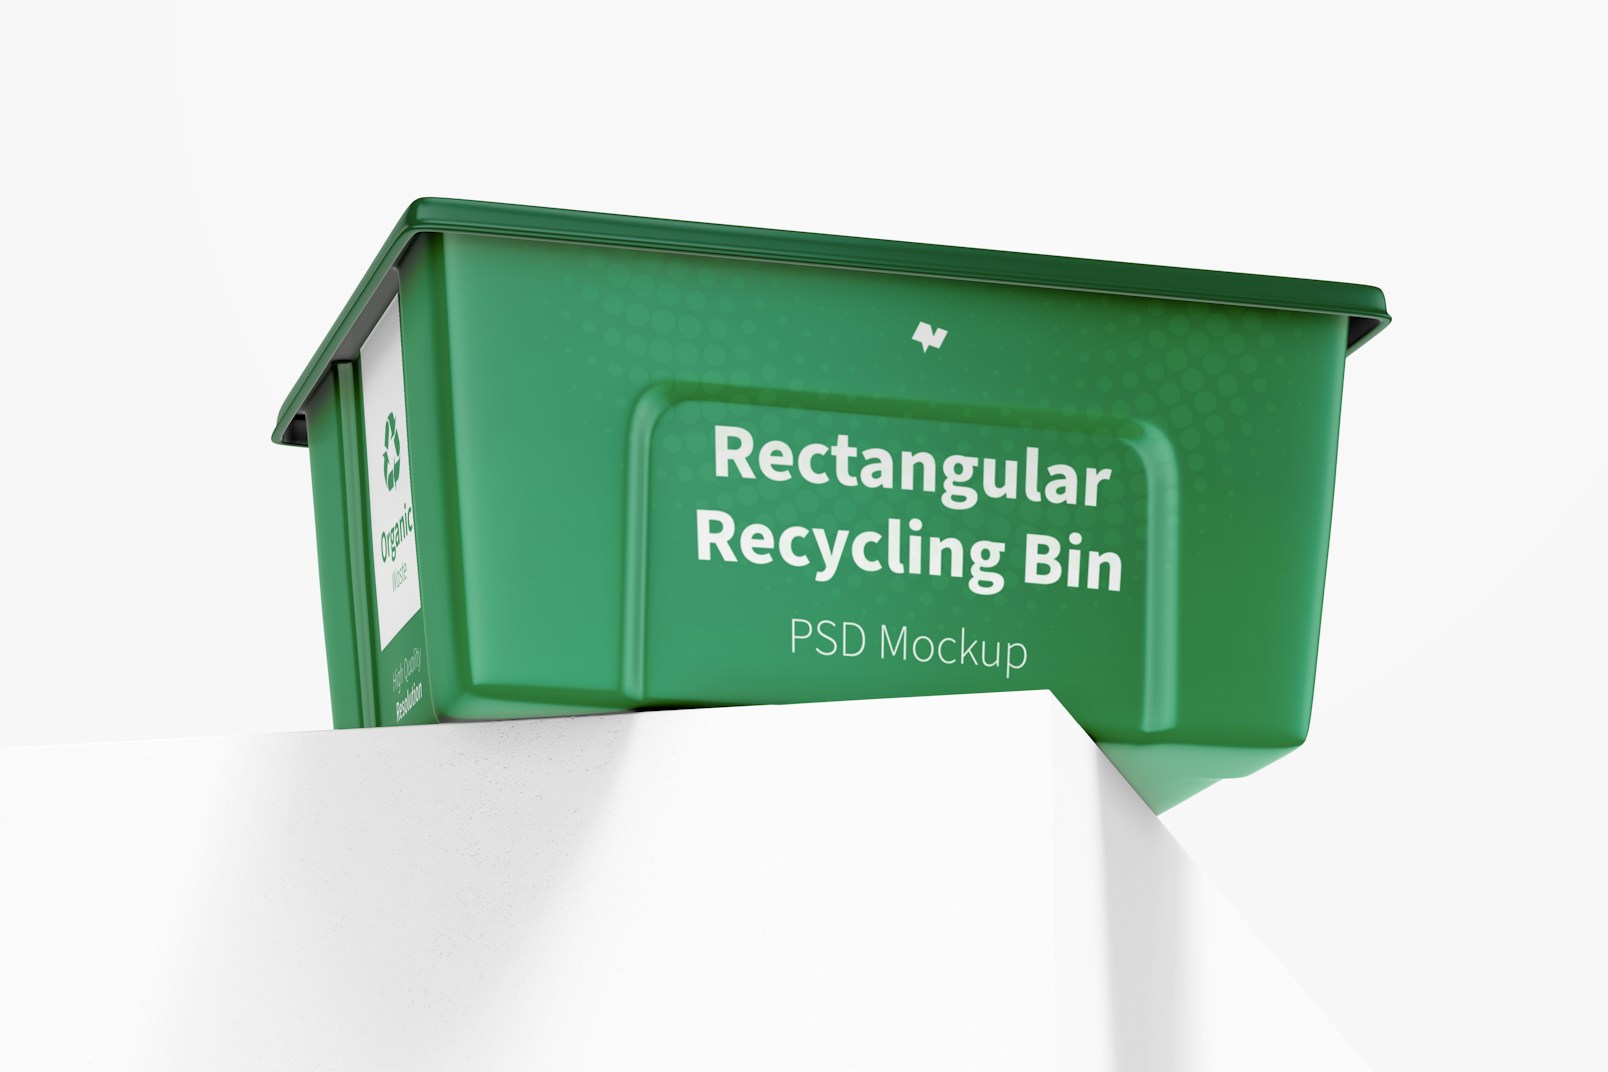 Rectangular Recycling Bin Mockup, Low Angle View